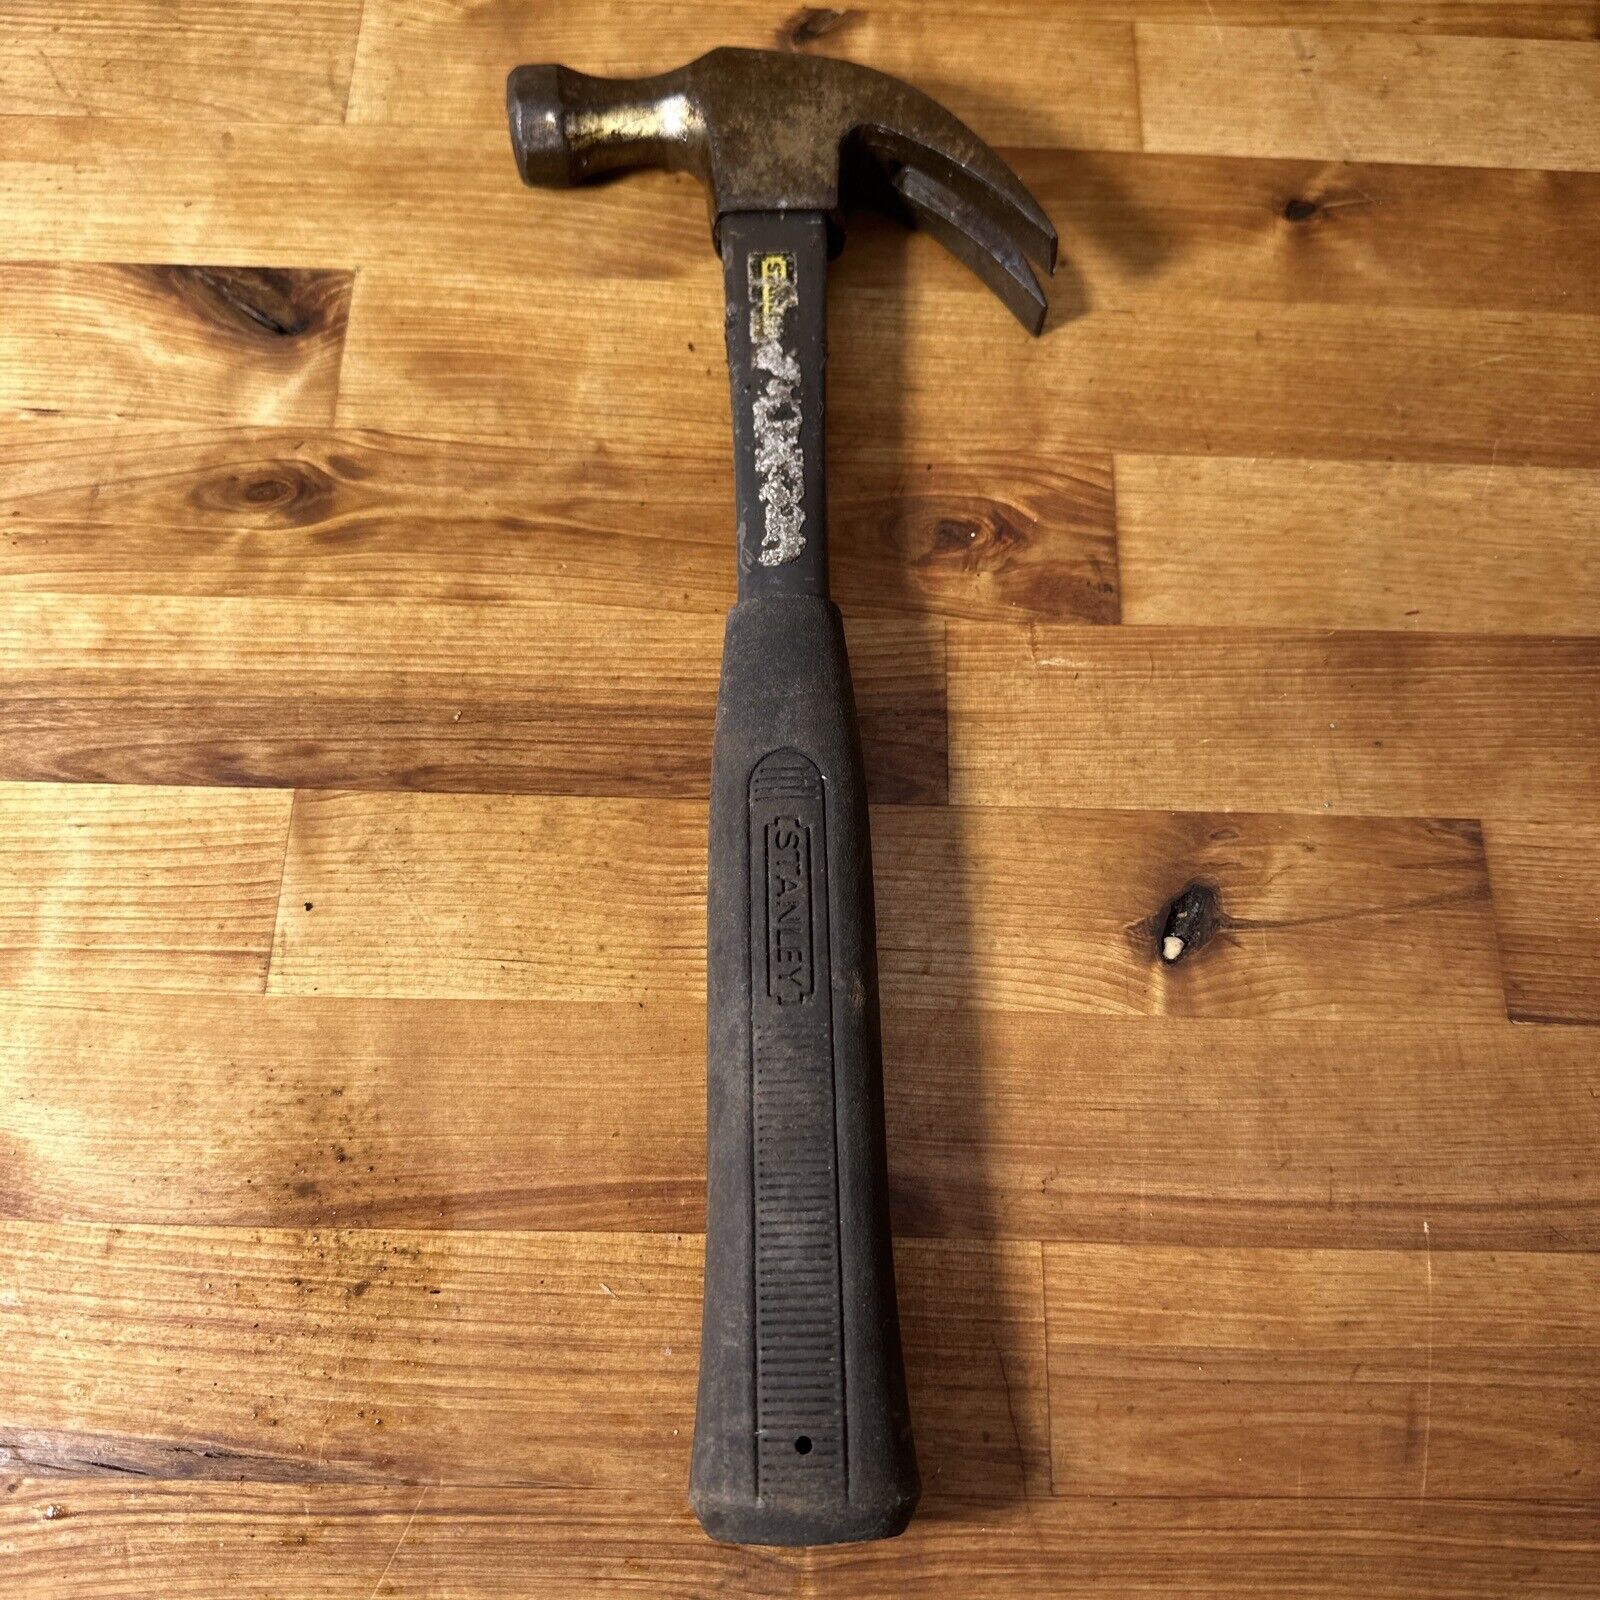 Stanley 16 oz. Claw Hammer Fiberglass Handle w/ Rubber Grip